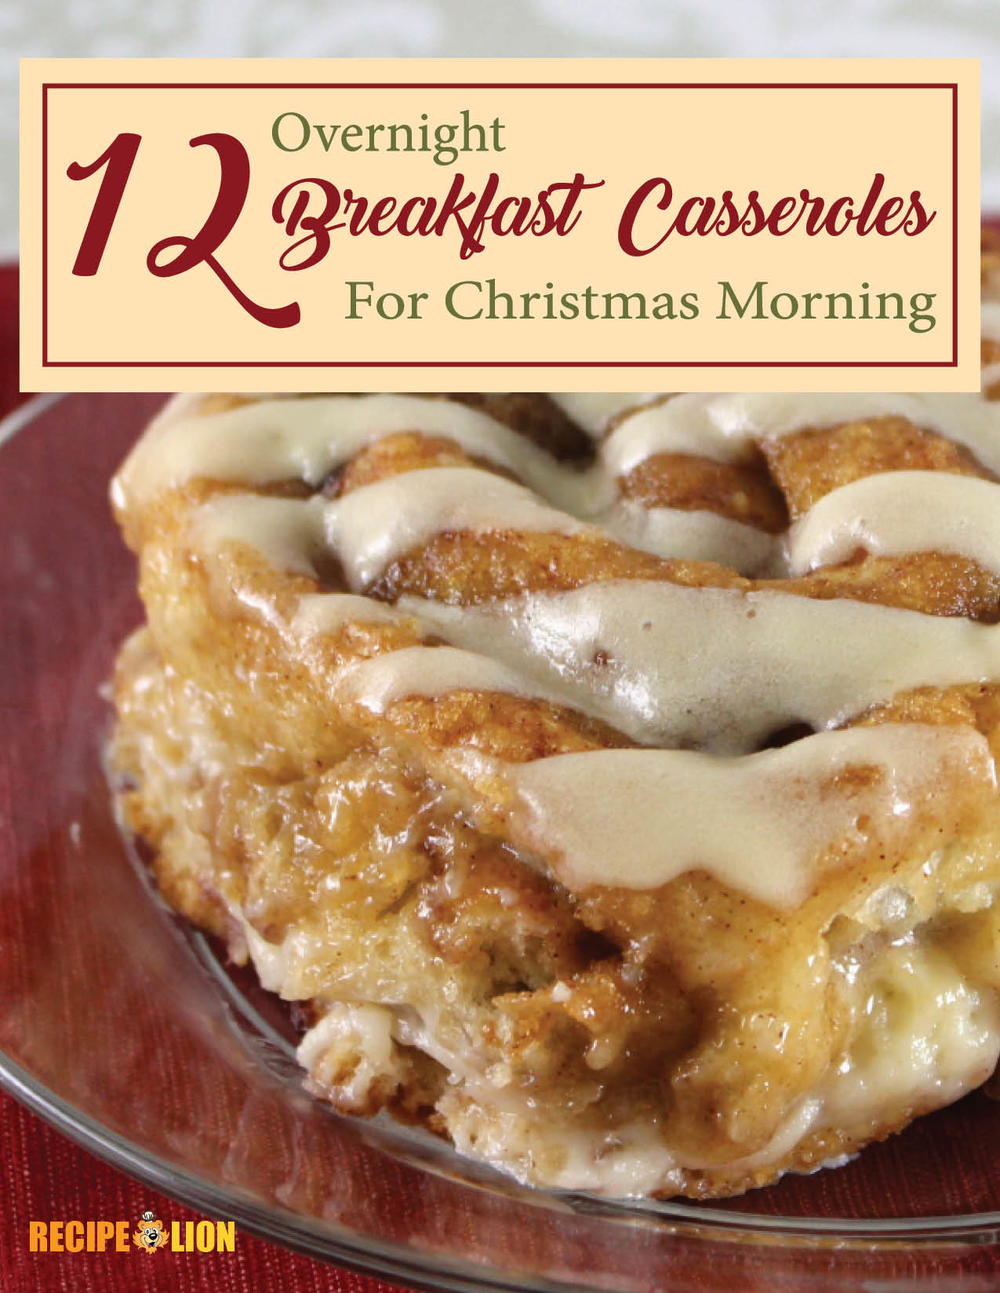 "12 Overnight Breakfast Casseroles for Christmas Morning" eCookbook ...